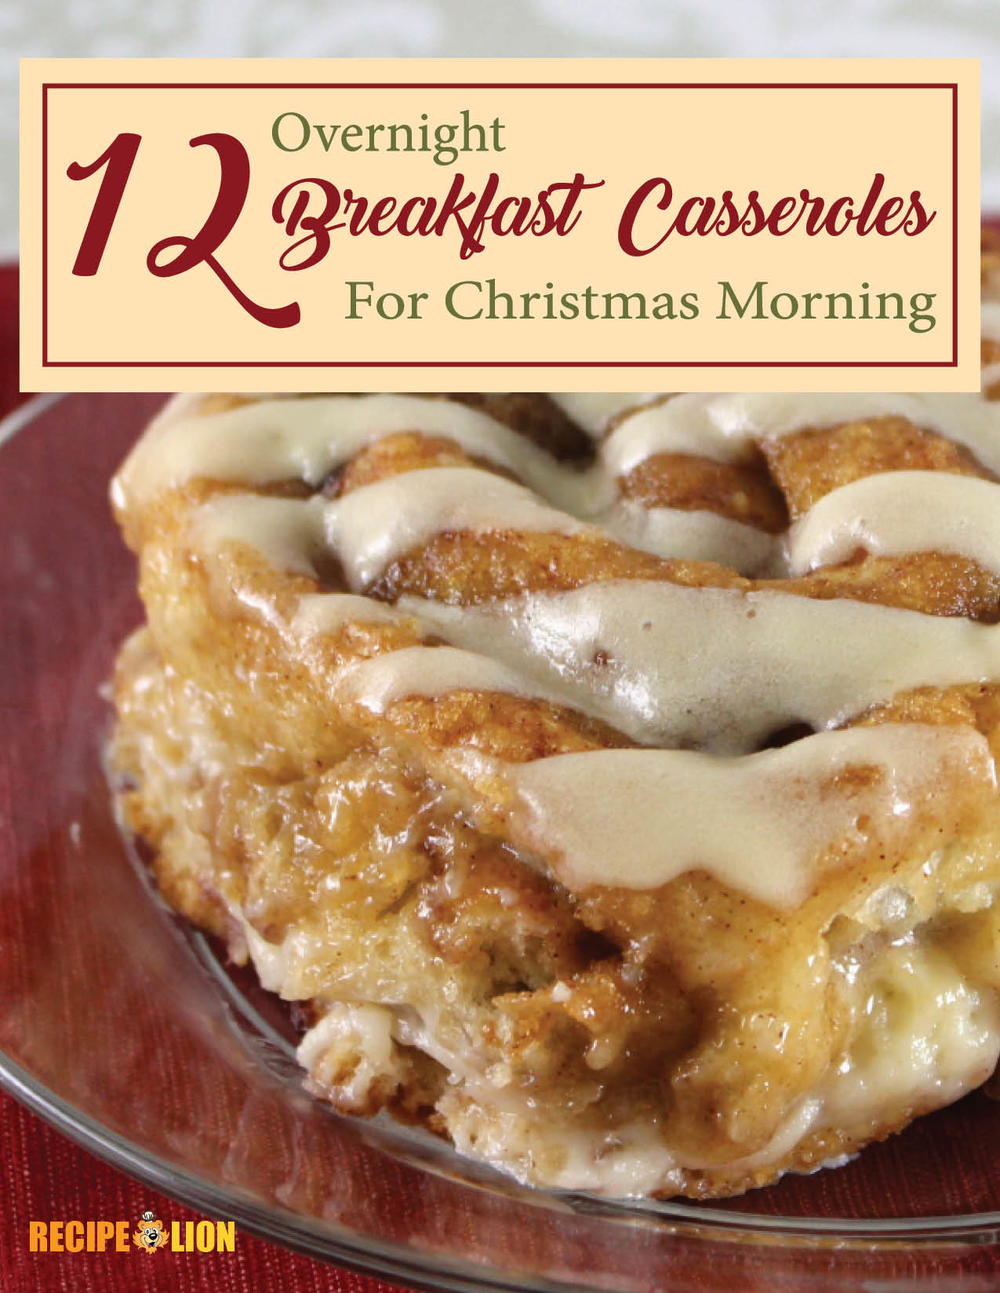 "12 Overnight Breakfast Casseroles for Christmas Morning" eCookbook ...